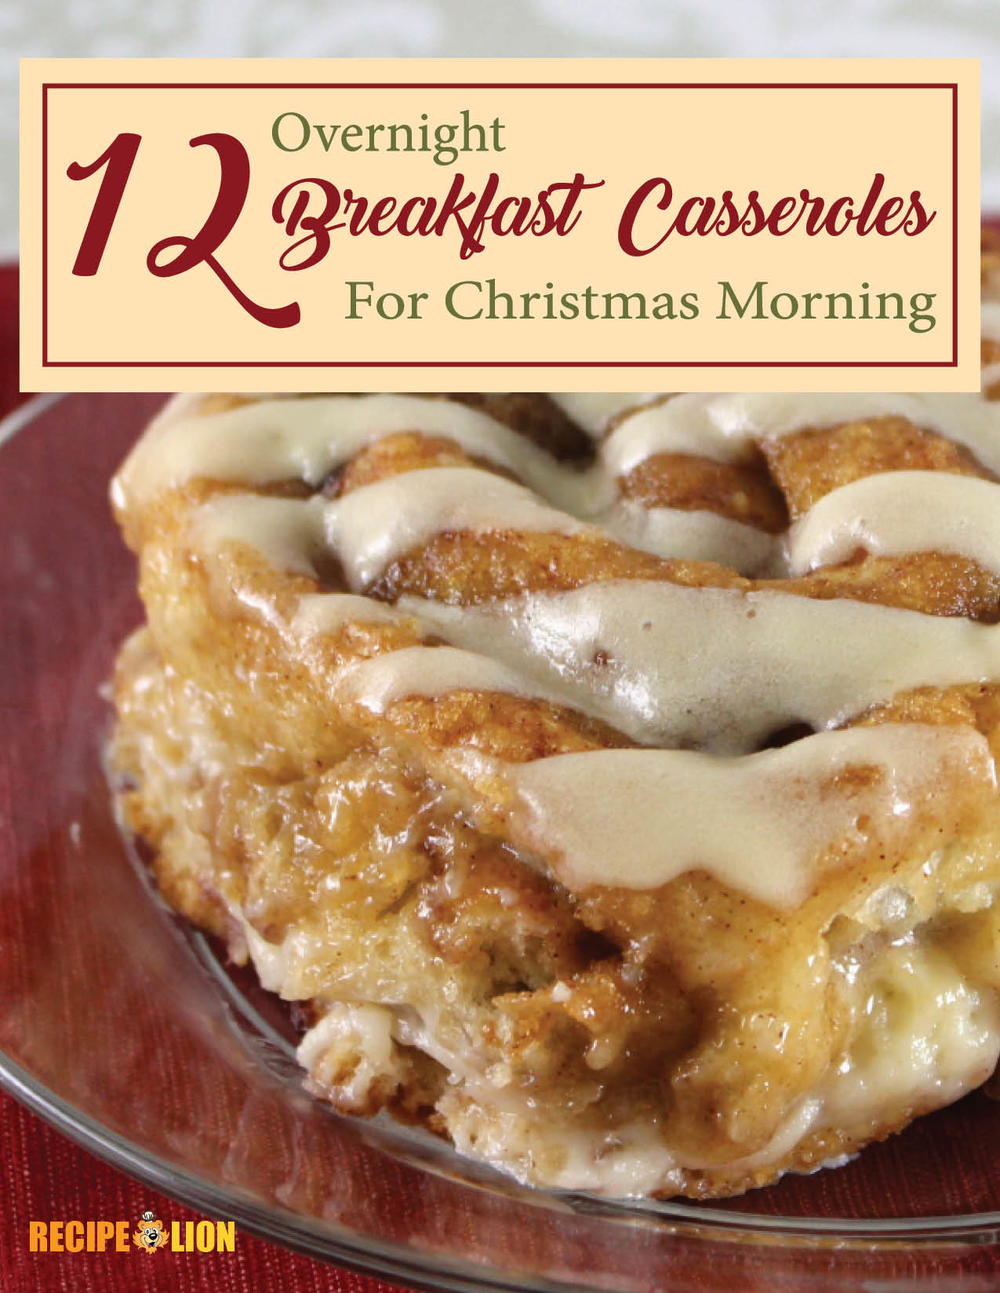 "12 Overnight Breakfast Casseroles for Christmas Morning" eCookbook ...